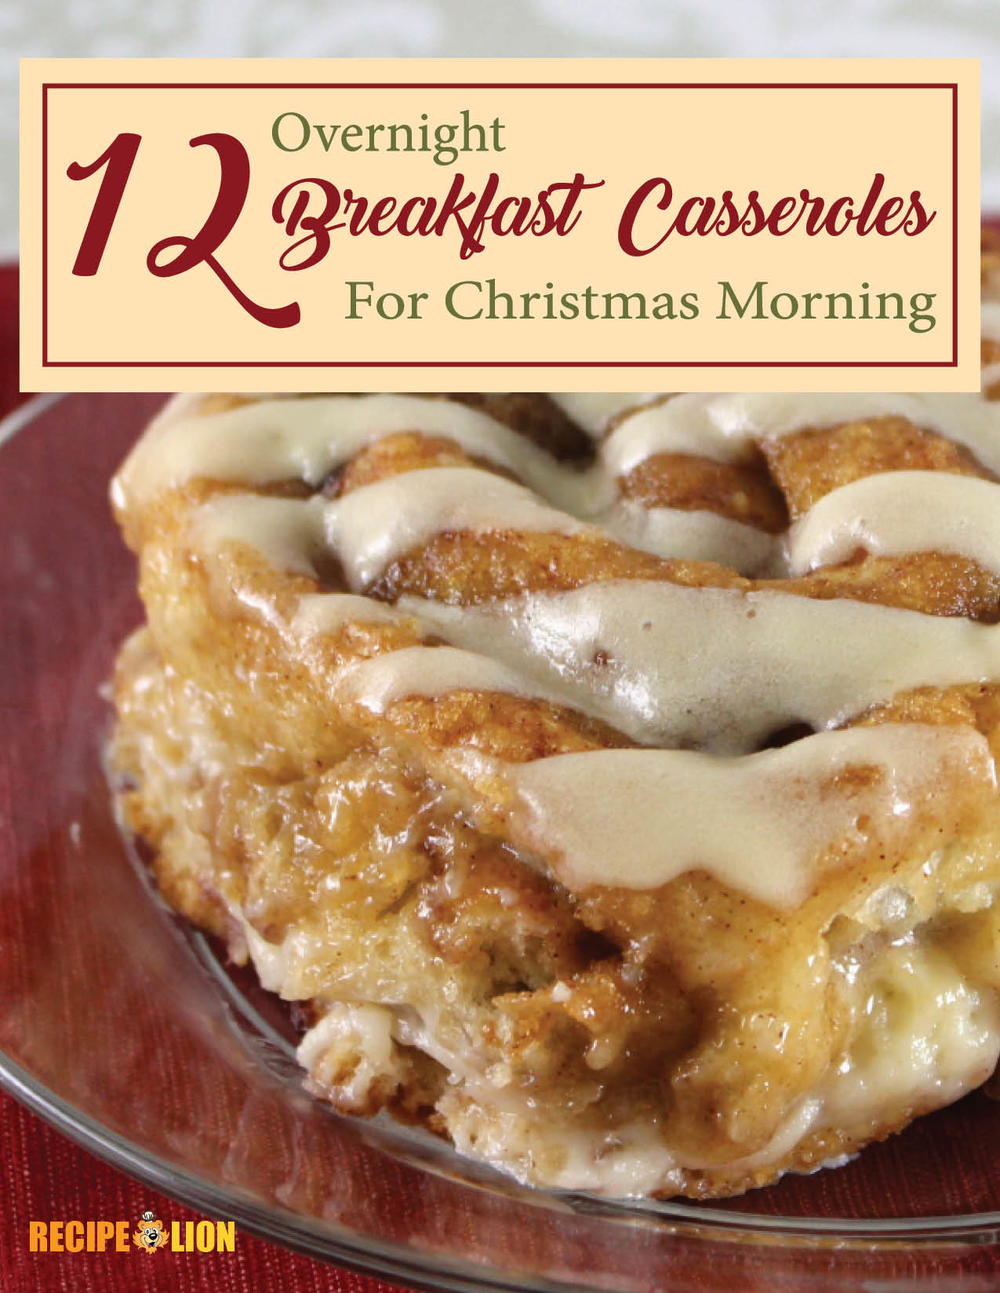 "12 Overnight Breakfast Casseroles for Christmas Morning" eCookbook ...